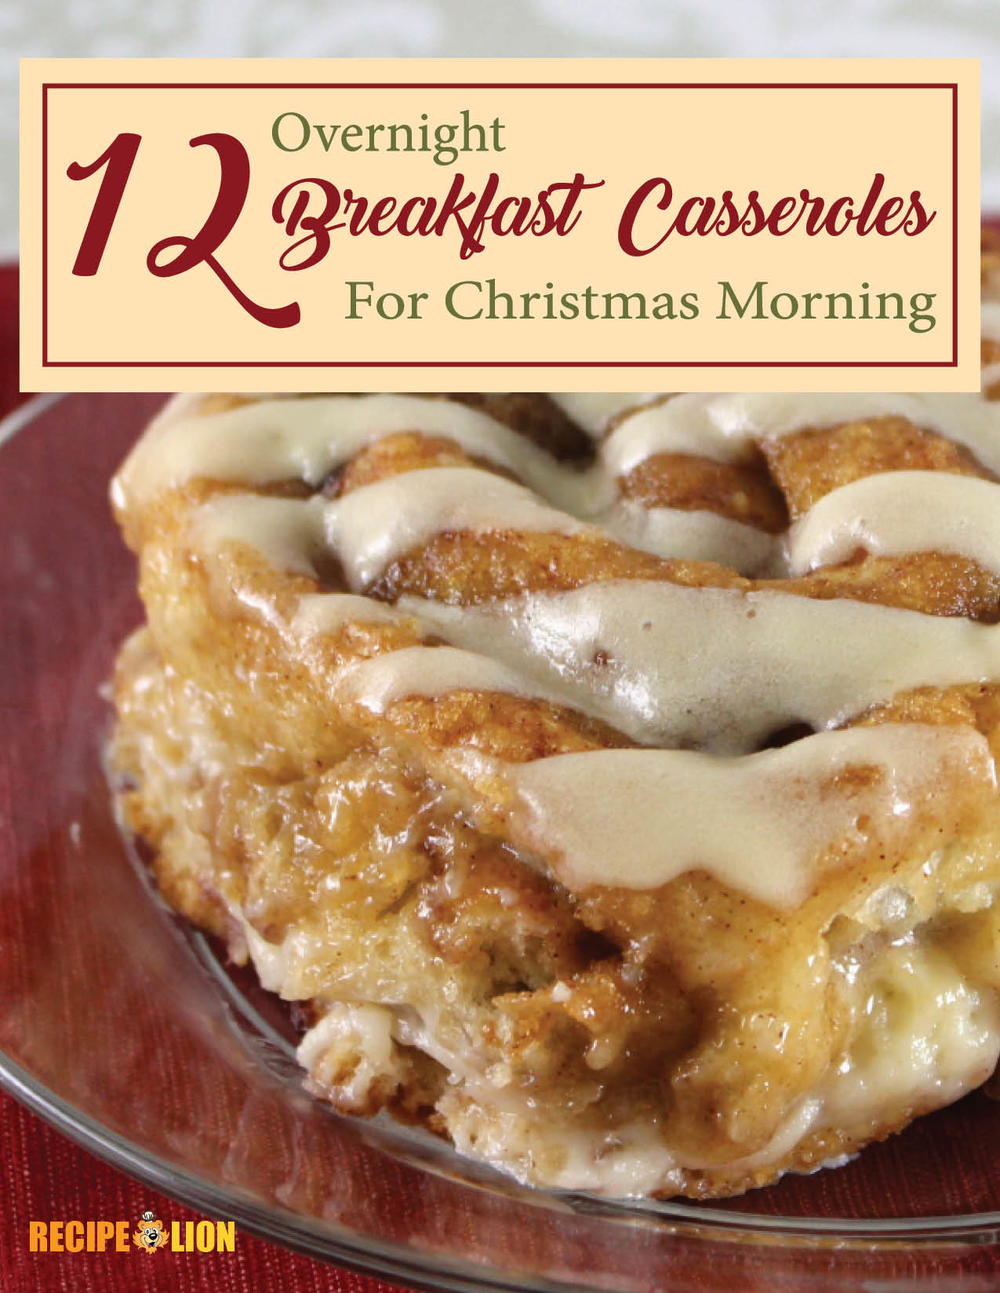 "12 Overnight Breakfast Casseroles for Christmas Morning" eCookbook ...